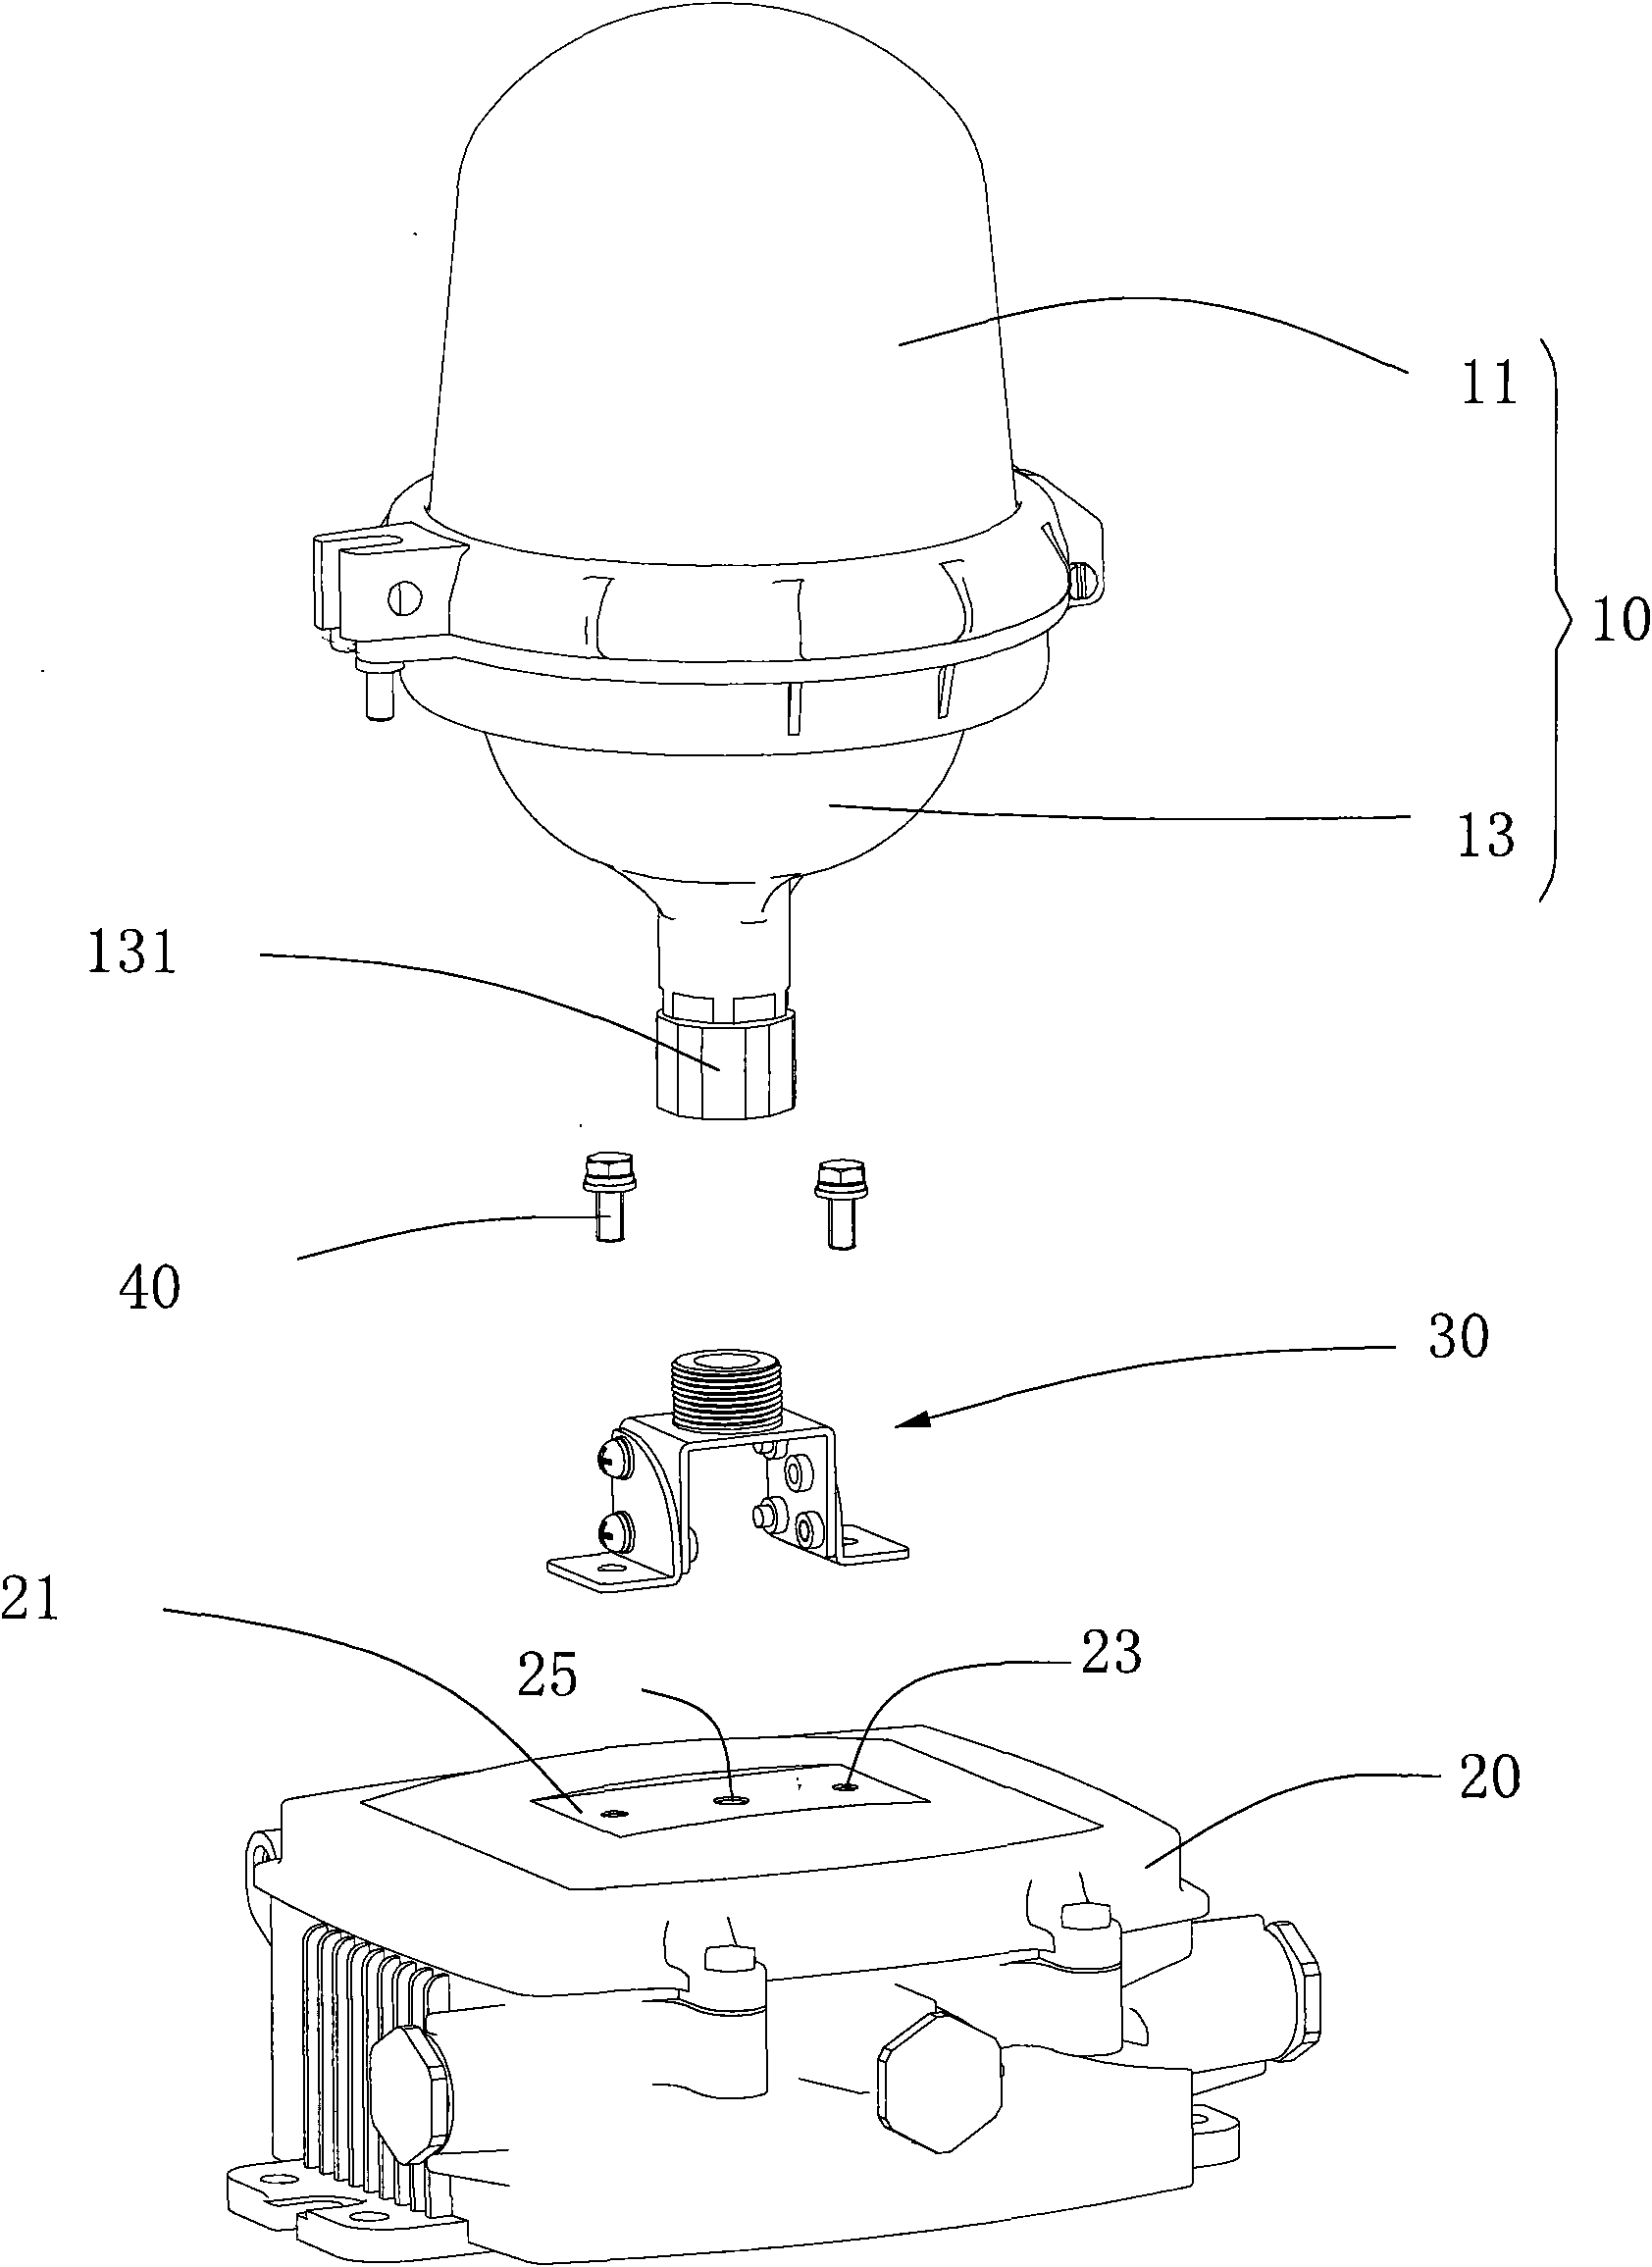 Angle adjusting device and lamps and lanterns using same